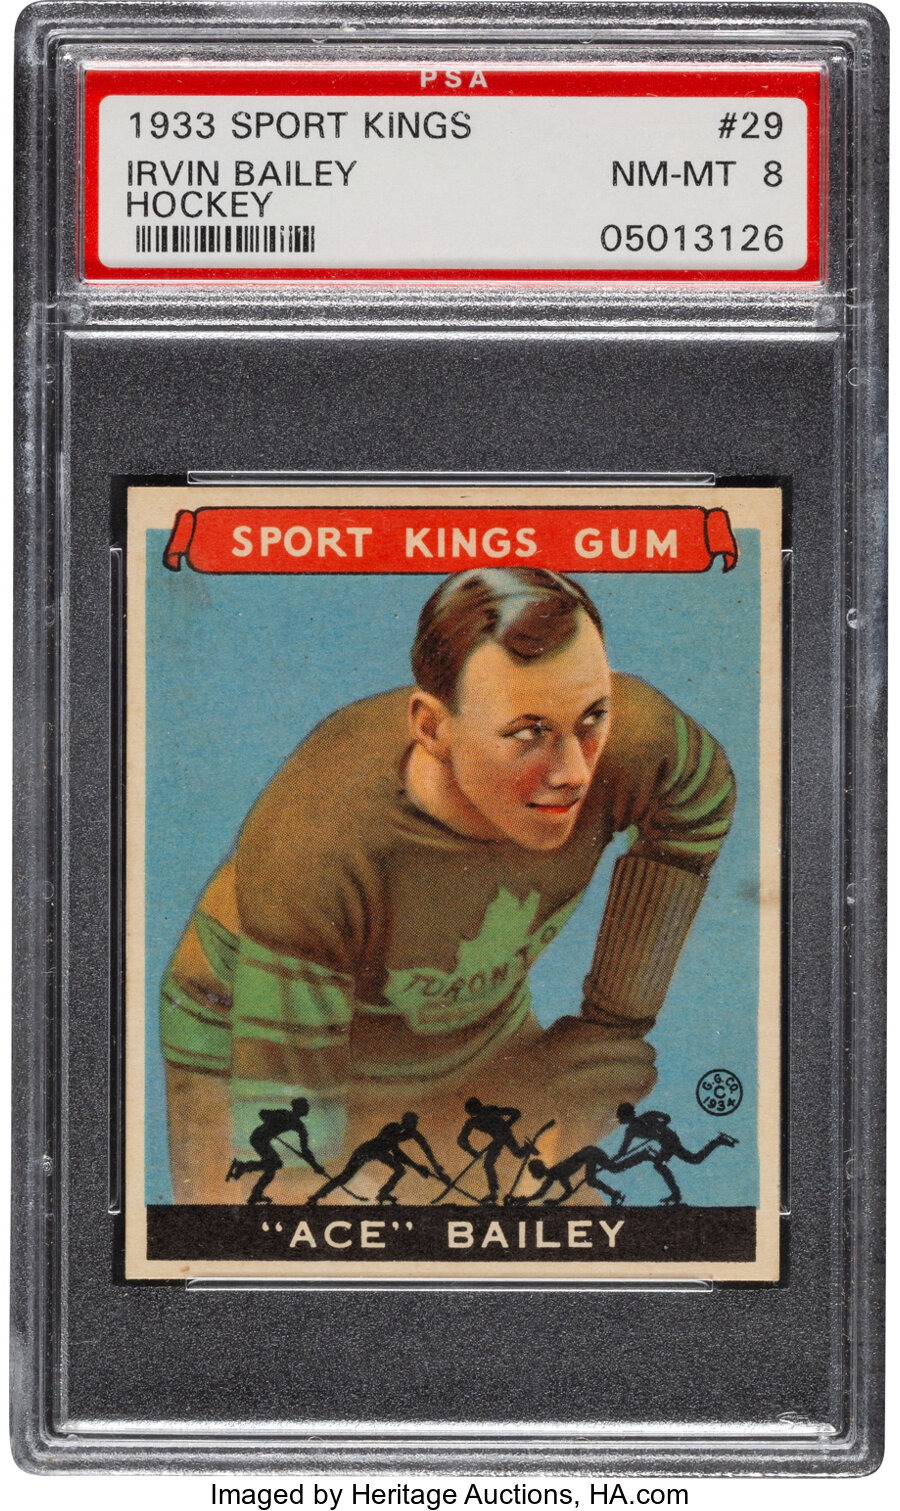 1933 Sport Kings Irvin Bailey (Hockey) #29 PSA NM-MT 8